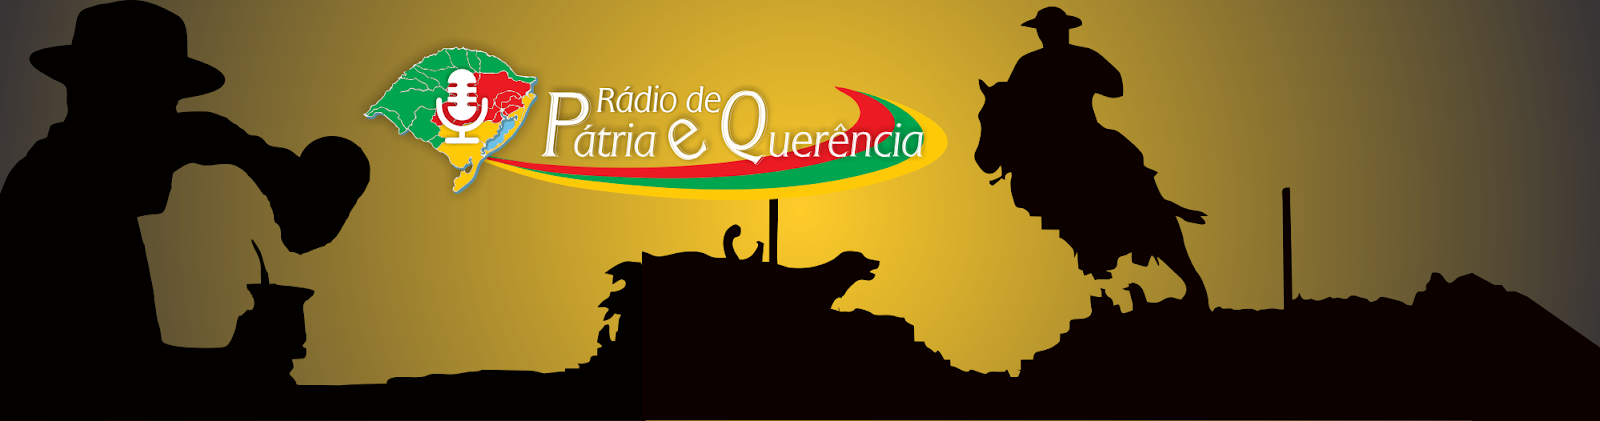 http://www.radiodepatriaequerencia.com.br/